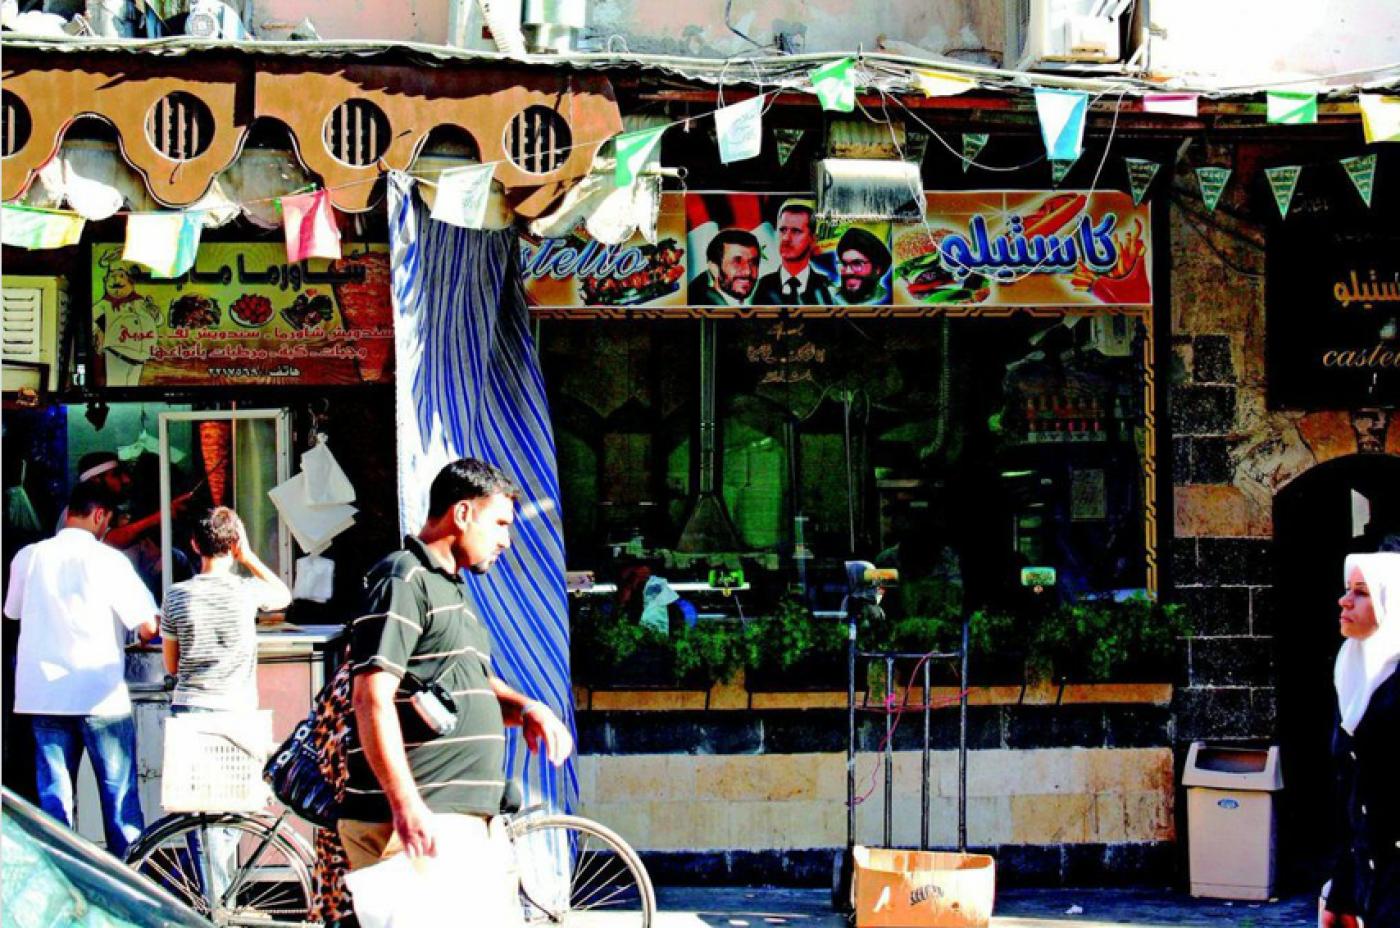 The ubiquitous sign over a shawarma restaurant shows President Mahmoud Ahmadinejad of Iran, President Bashar al Assad of Syria, and Hassan Nasrallah, Secretary General of Hezbollah. Propagandistic photos like this were common around Damascus.